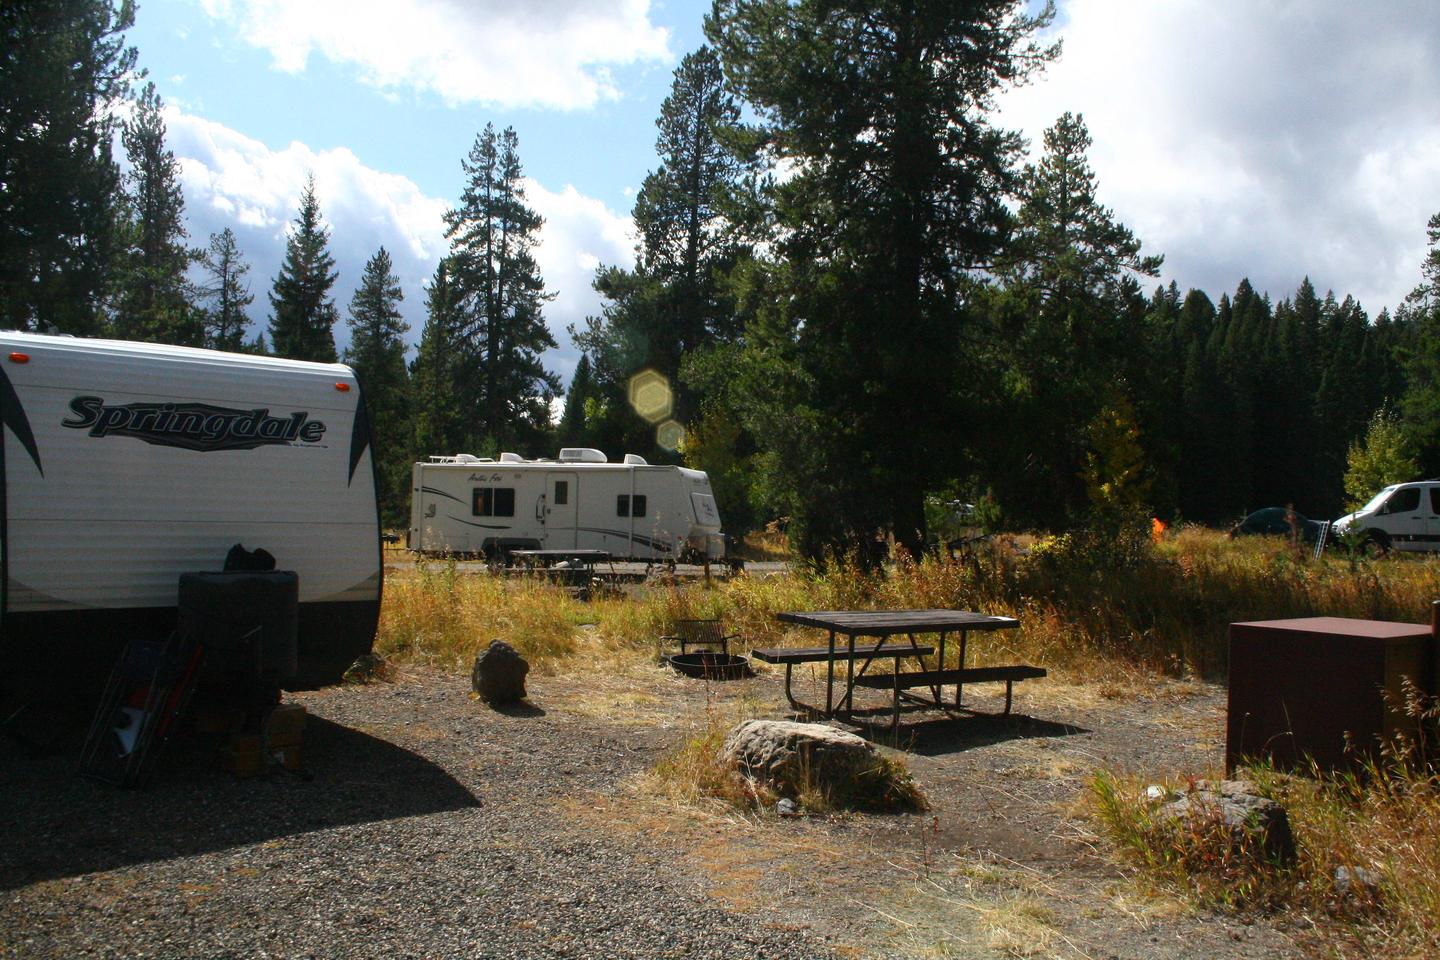 Pebble Creek Campground site #17